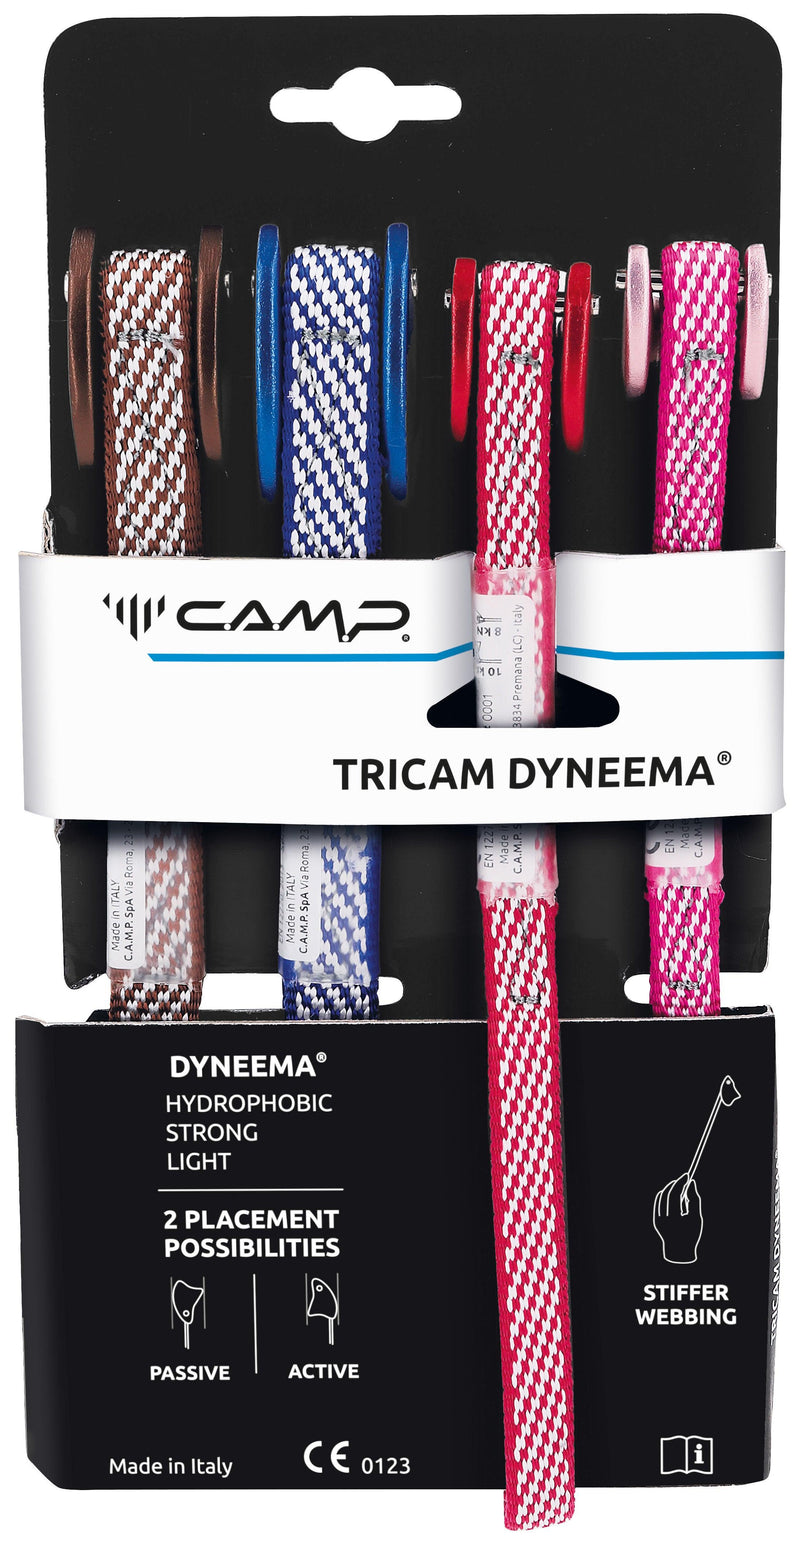 &Phi;όρτωση εικόνας σε προβολέα Gallery, Tricam Dyneema Set - CAMP - ExtremeGear.org
